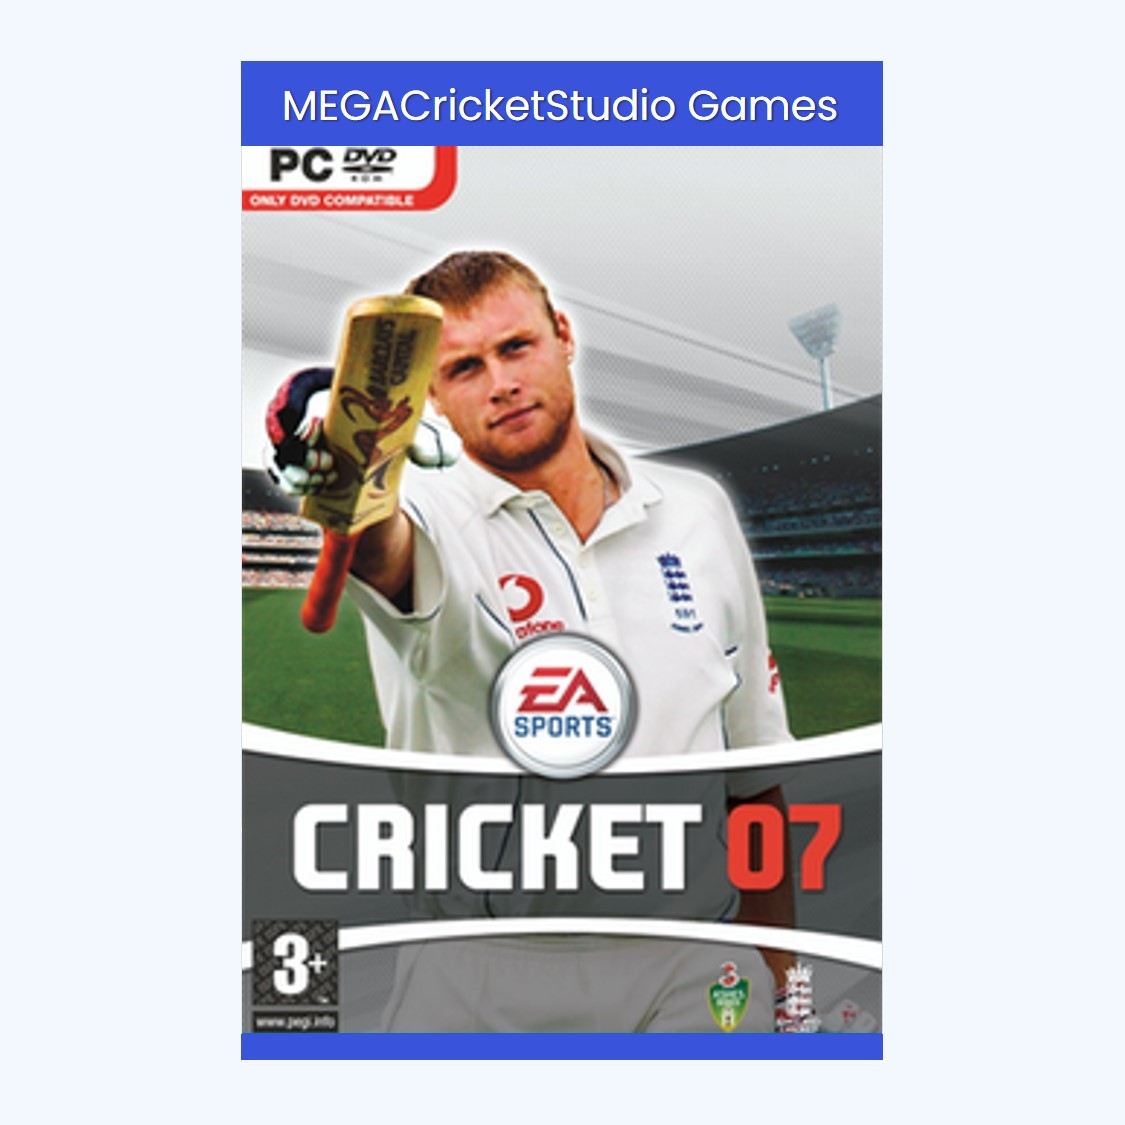 EA-Cricket-07-Product-image-MEGA-Cricket-Studio